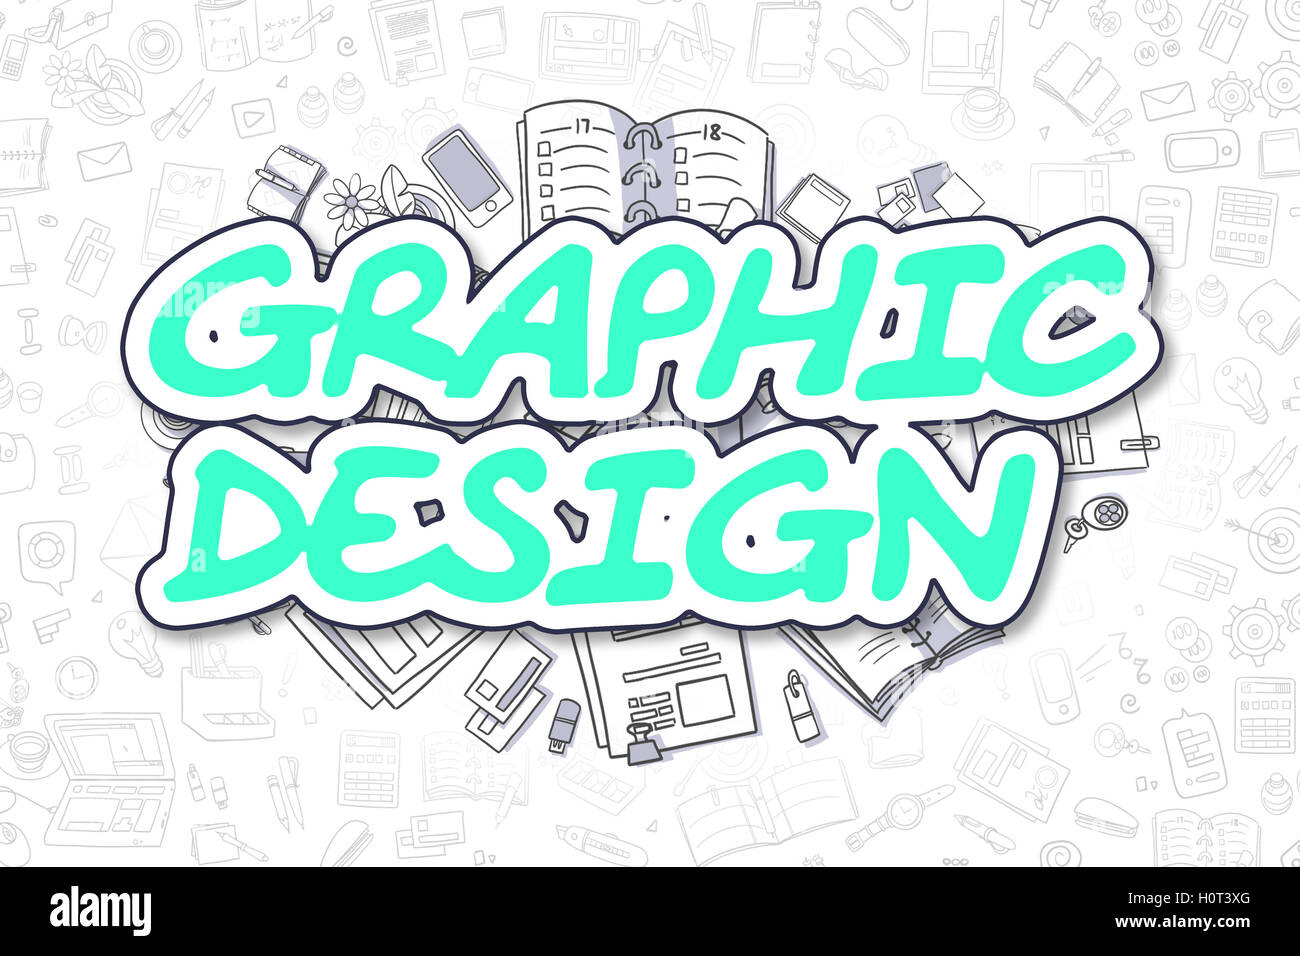 Graphic Design - Cartoon Green Word. Business Concept. Stock Photo